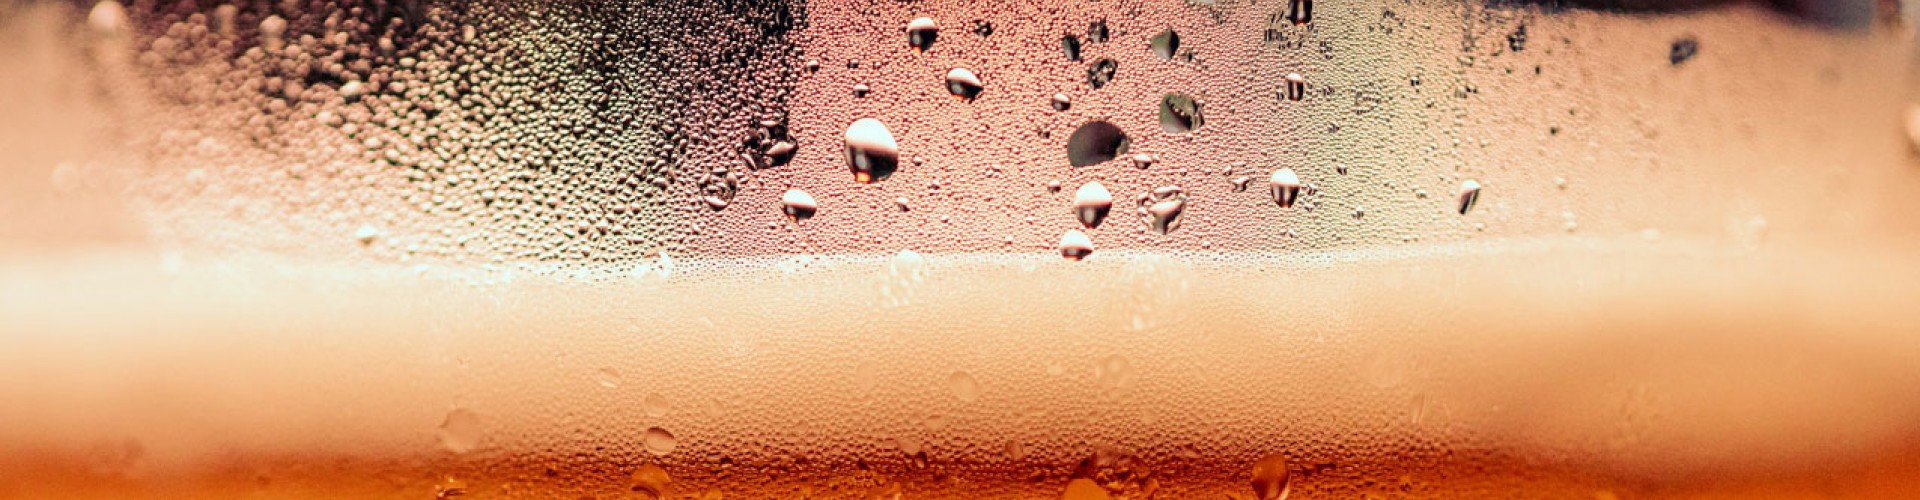 closeup of beer